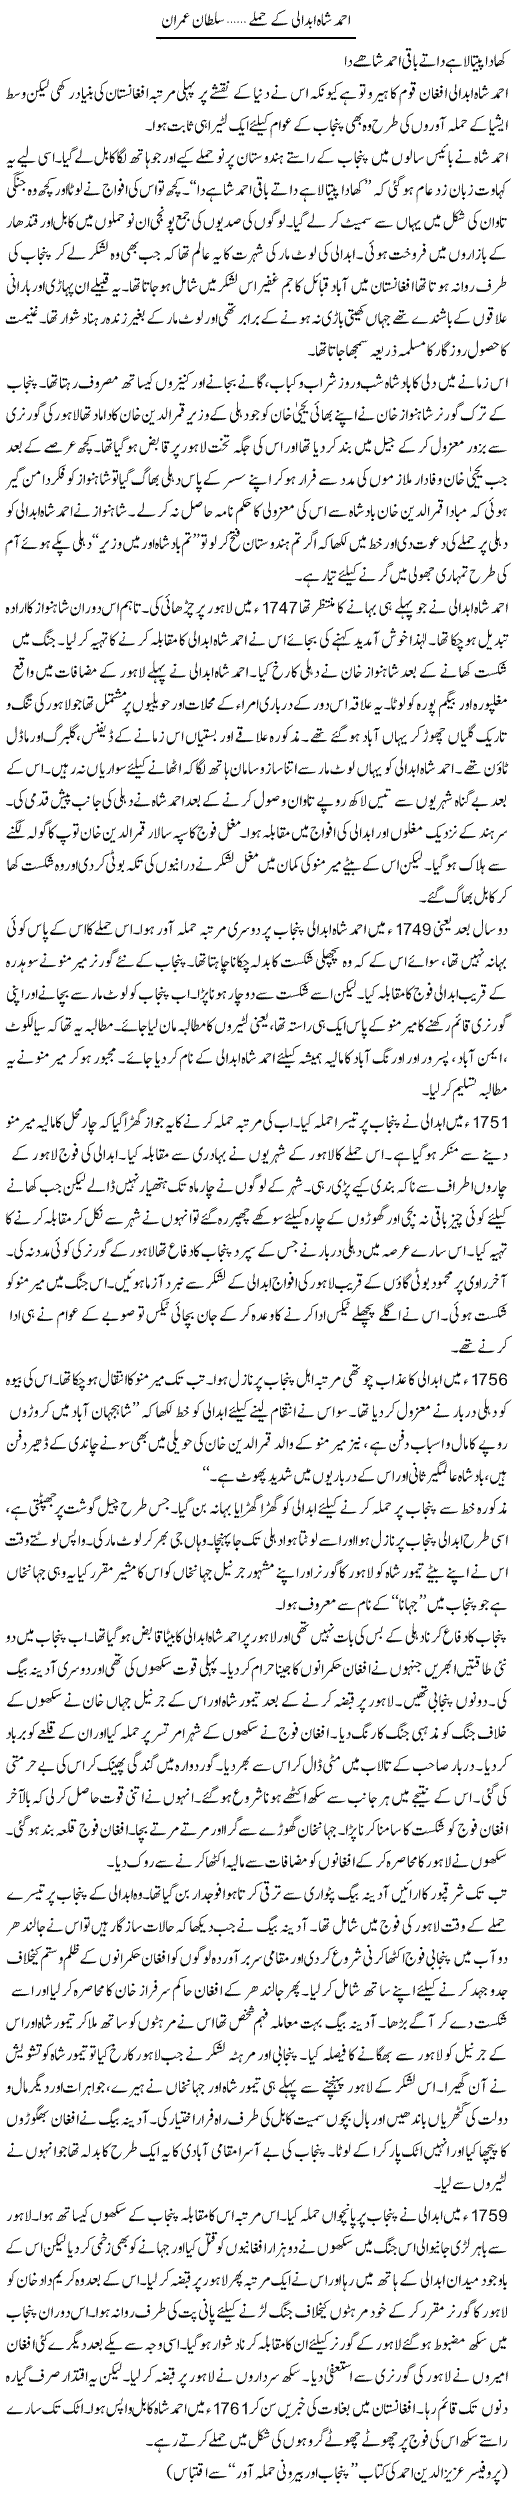 Ahmad Shah Abdali Ke Hamle | Sultan Imran | Daily Urdu Columns